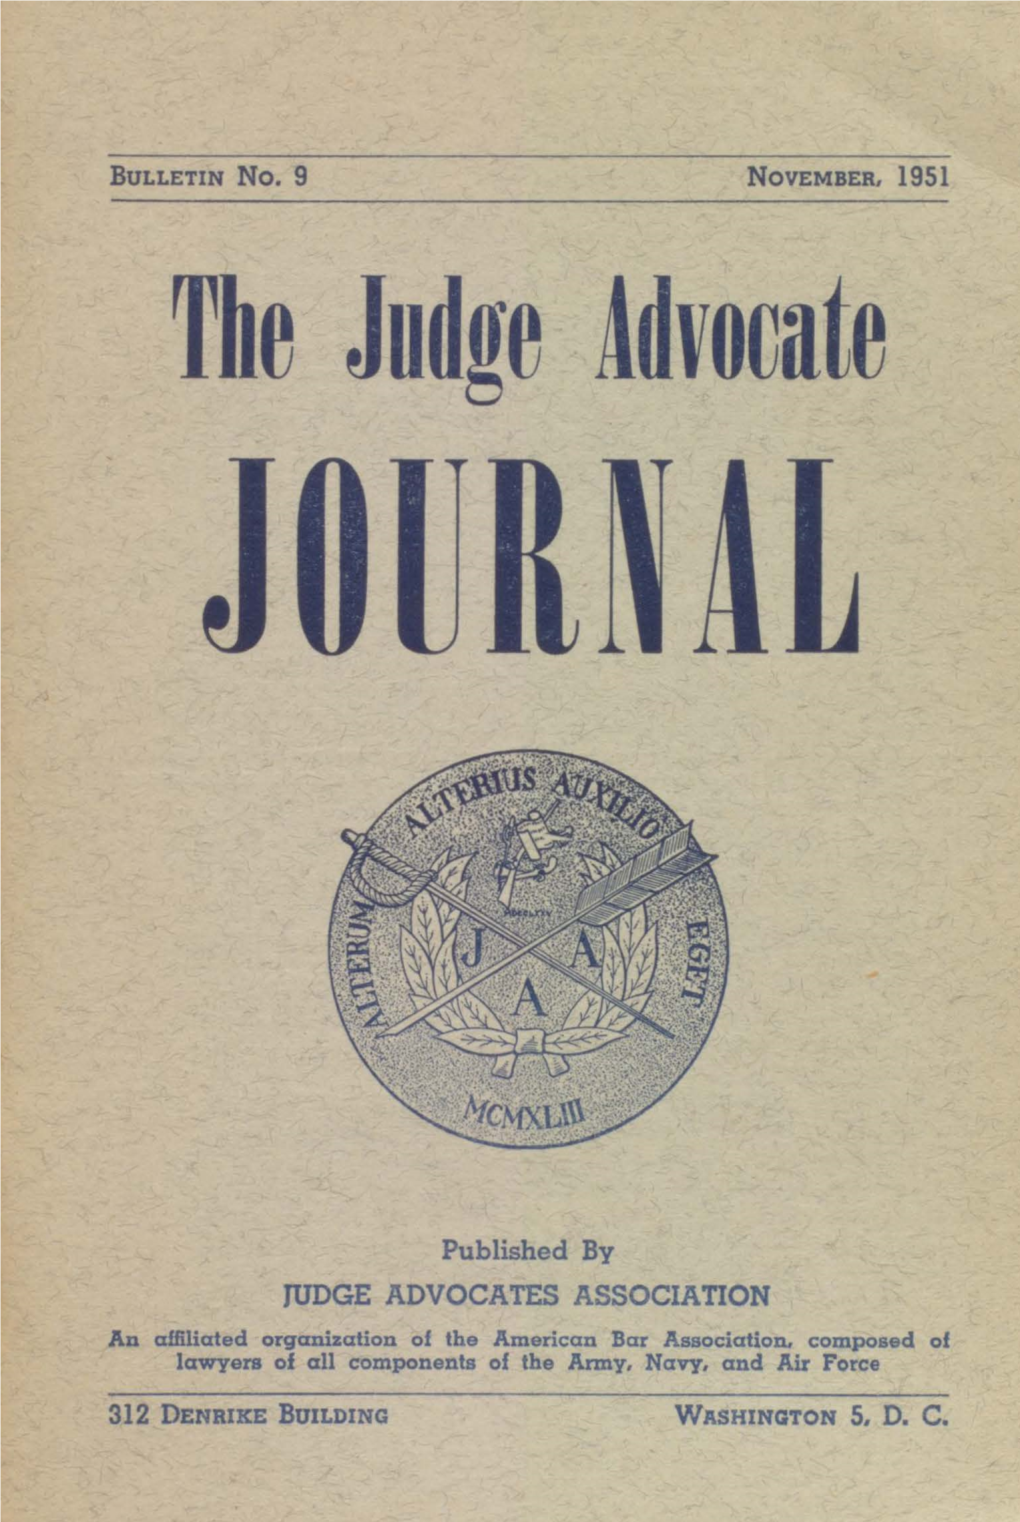 The Judge Advocate Journal, Bulletin No. 9, November 1951